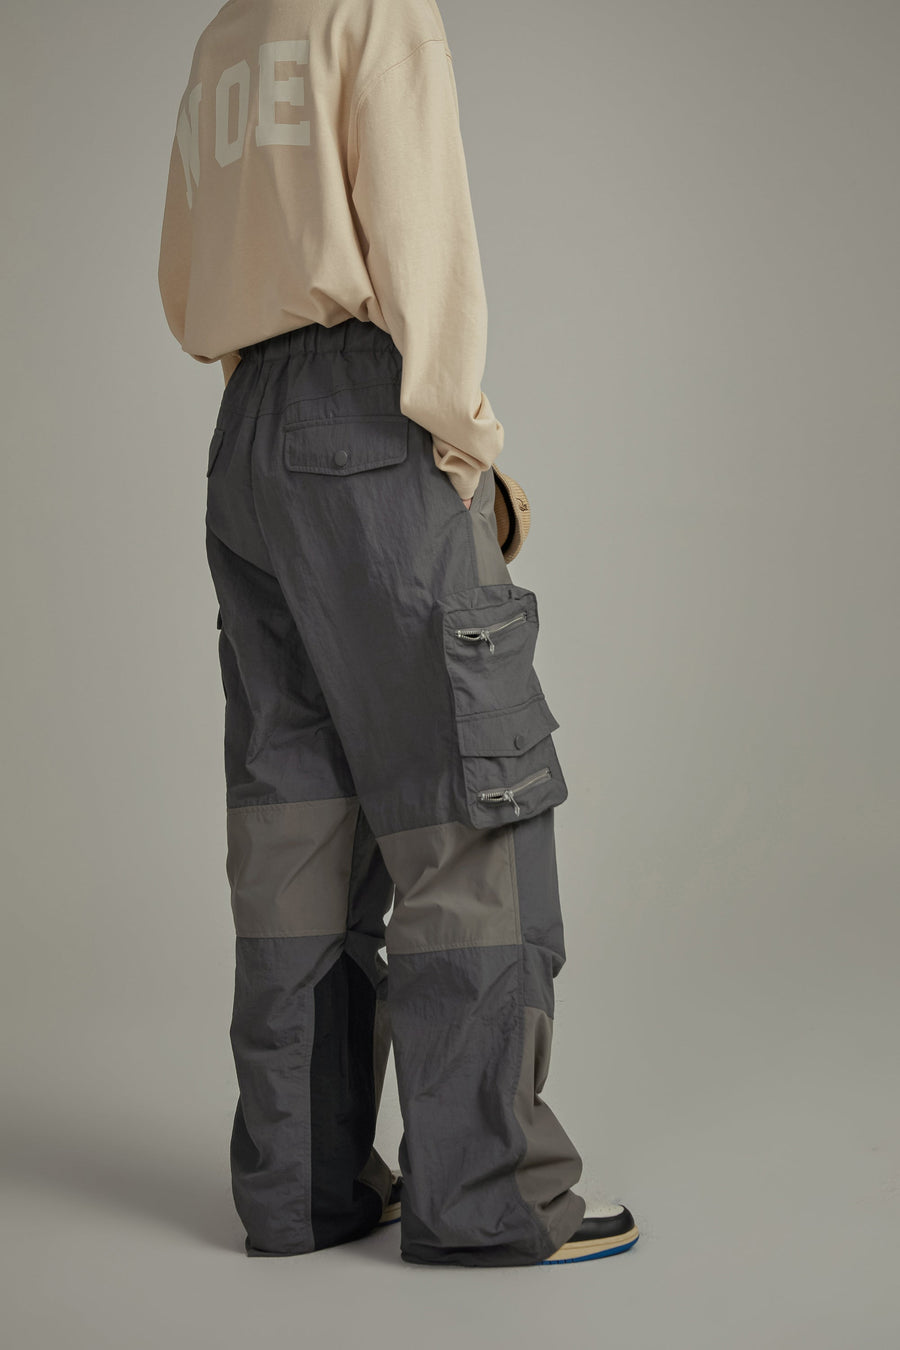 CHUU Color Matching Cargo Pants